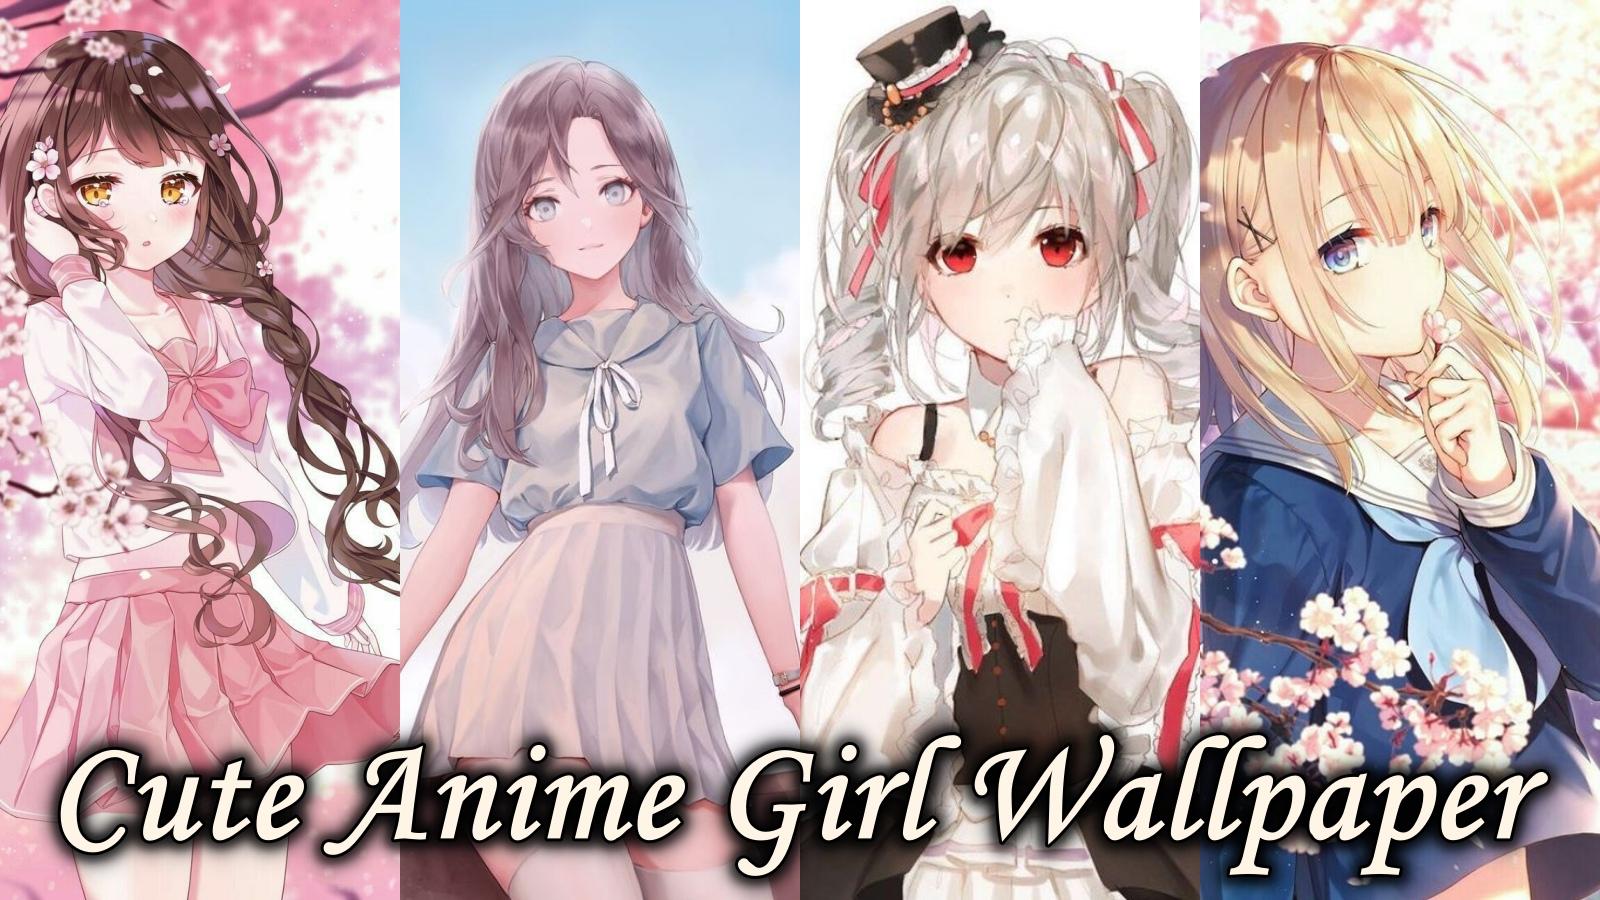 Kawaii Gacha - Cute anime wallpaper 1.0 Free Download